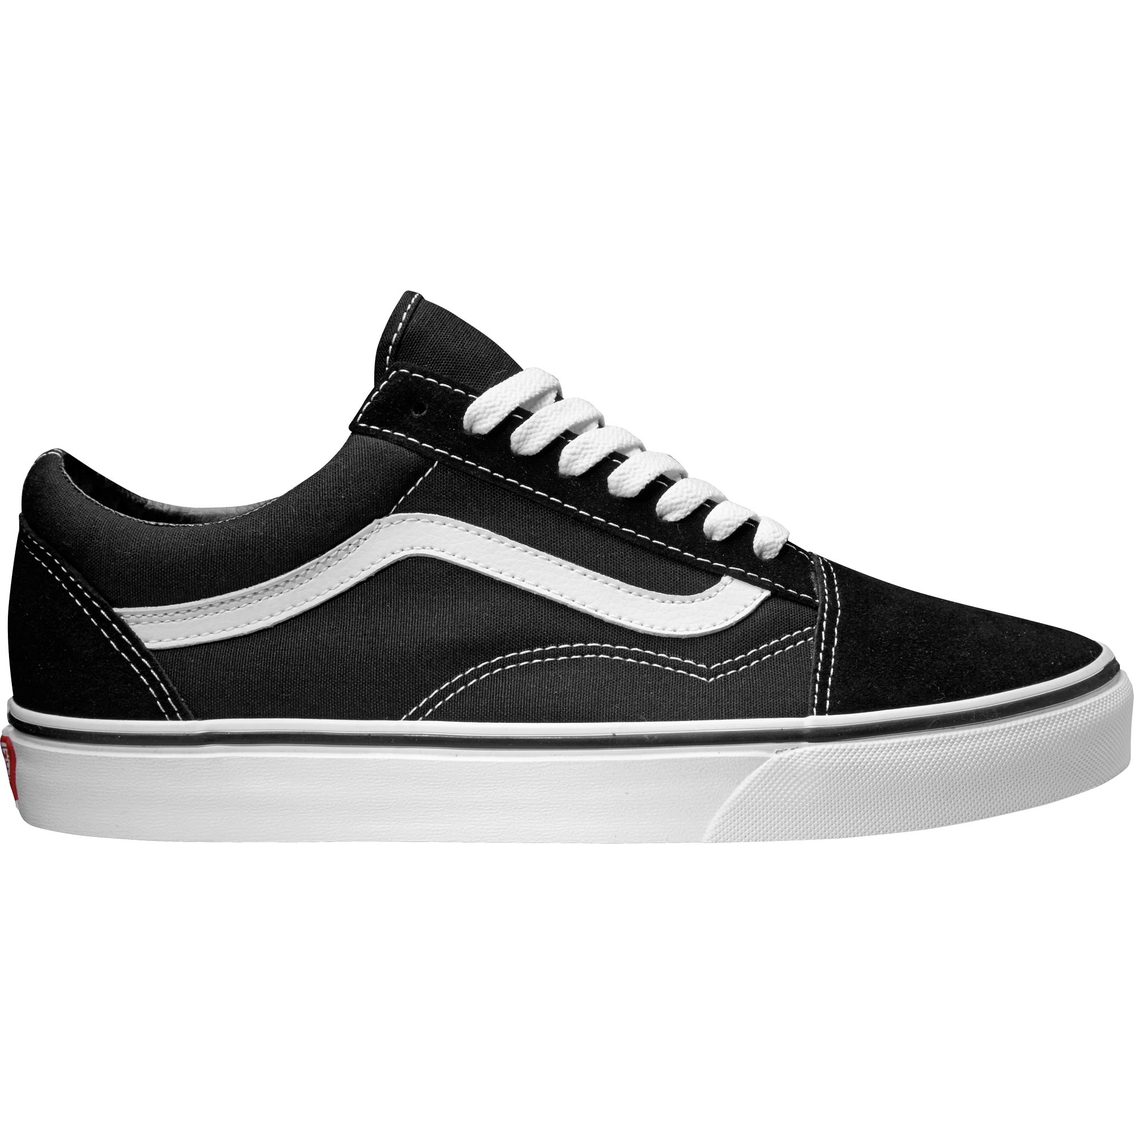 purchase vans shoes online